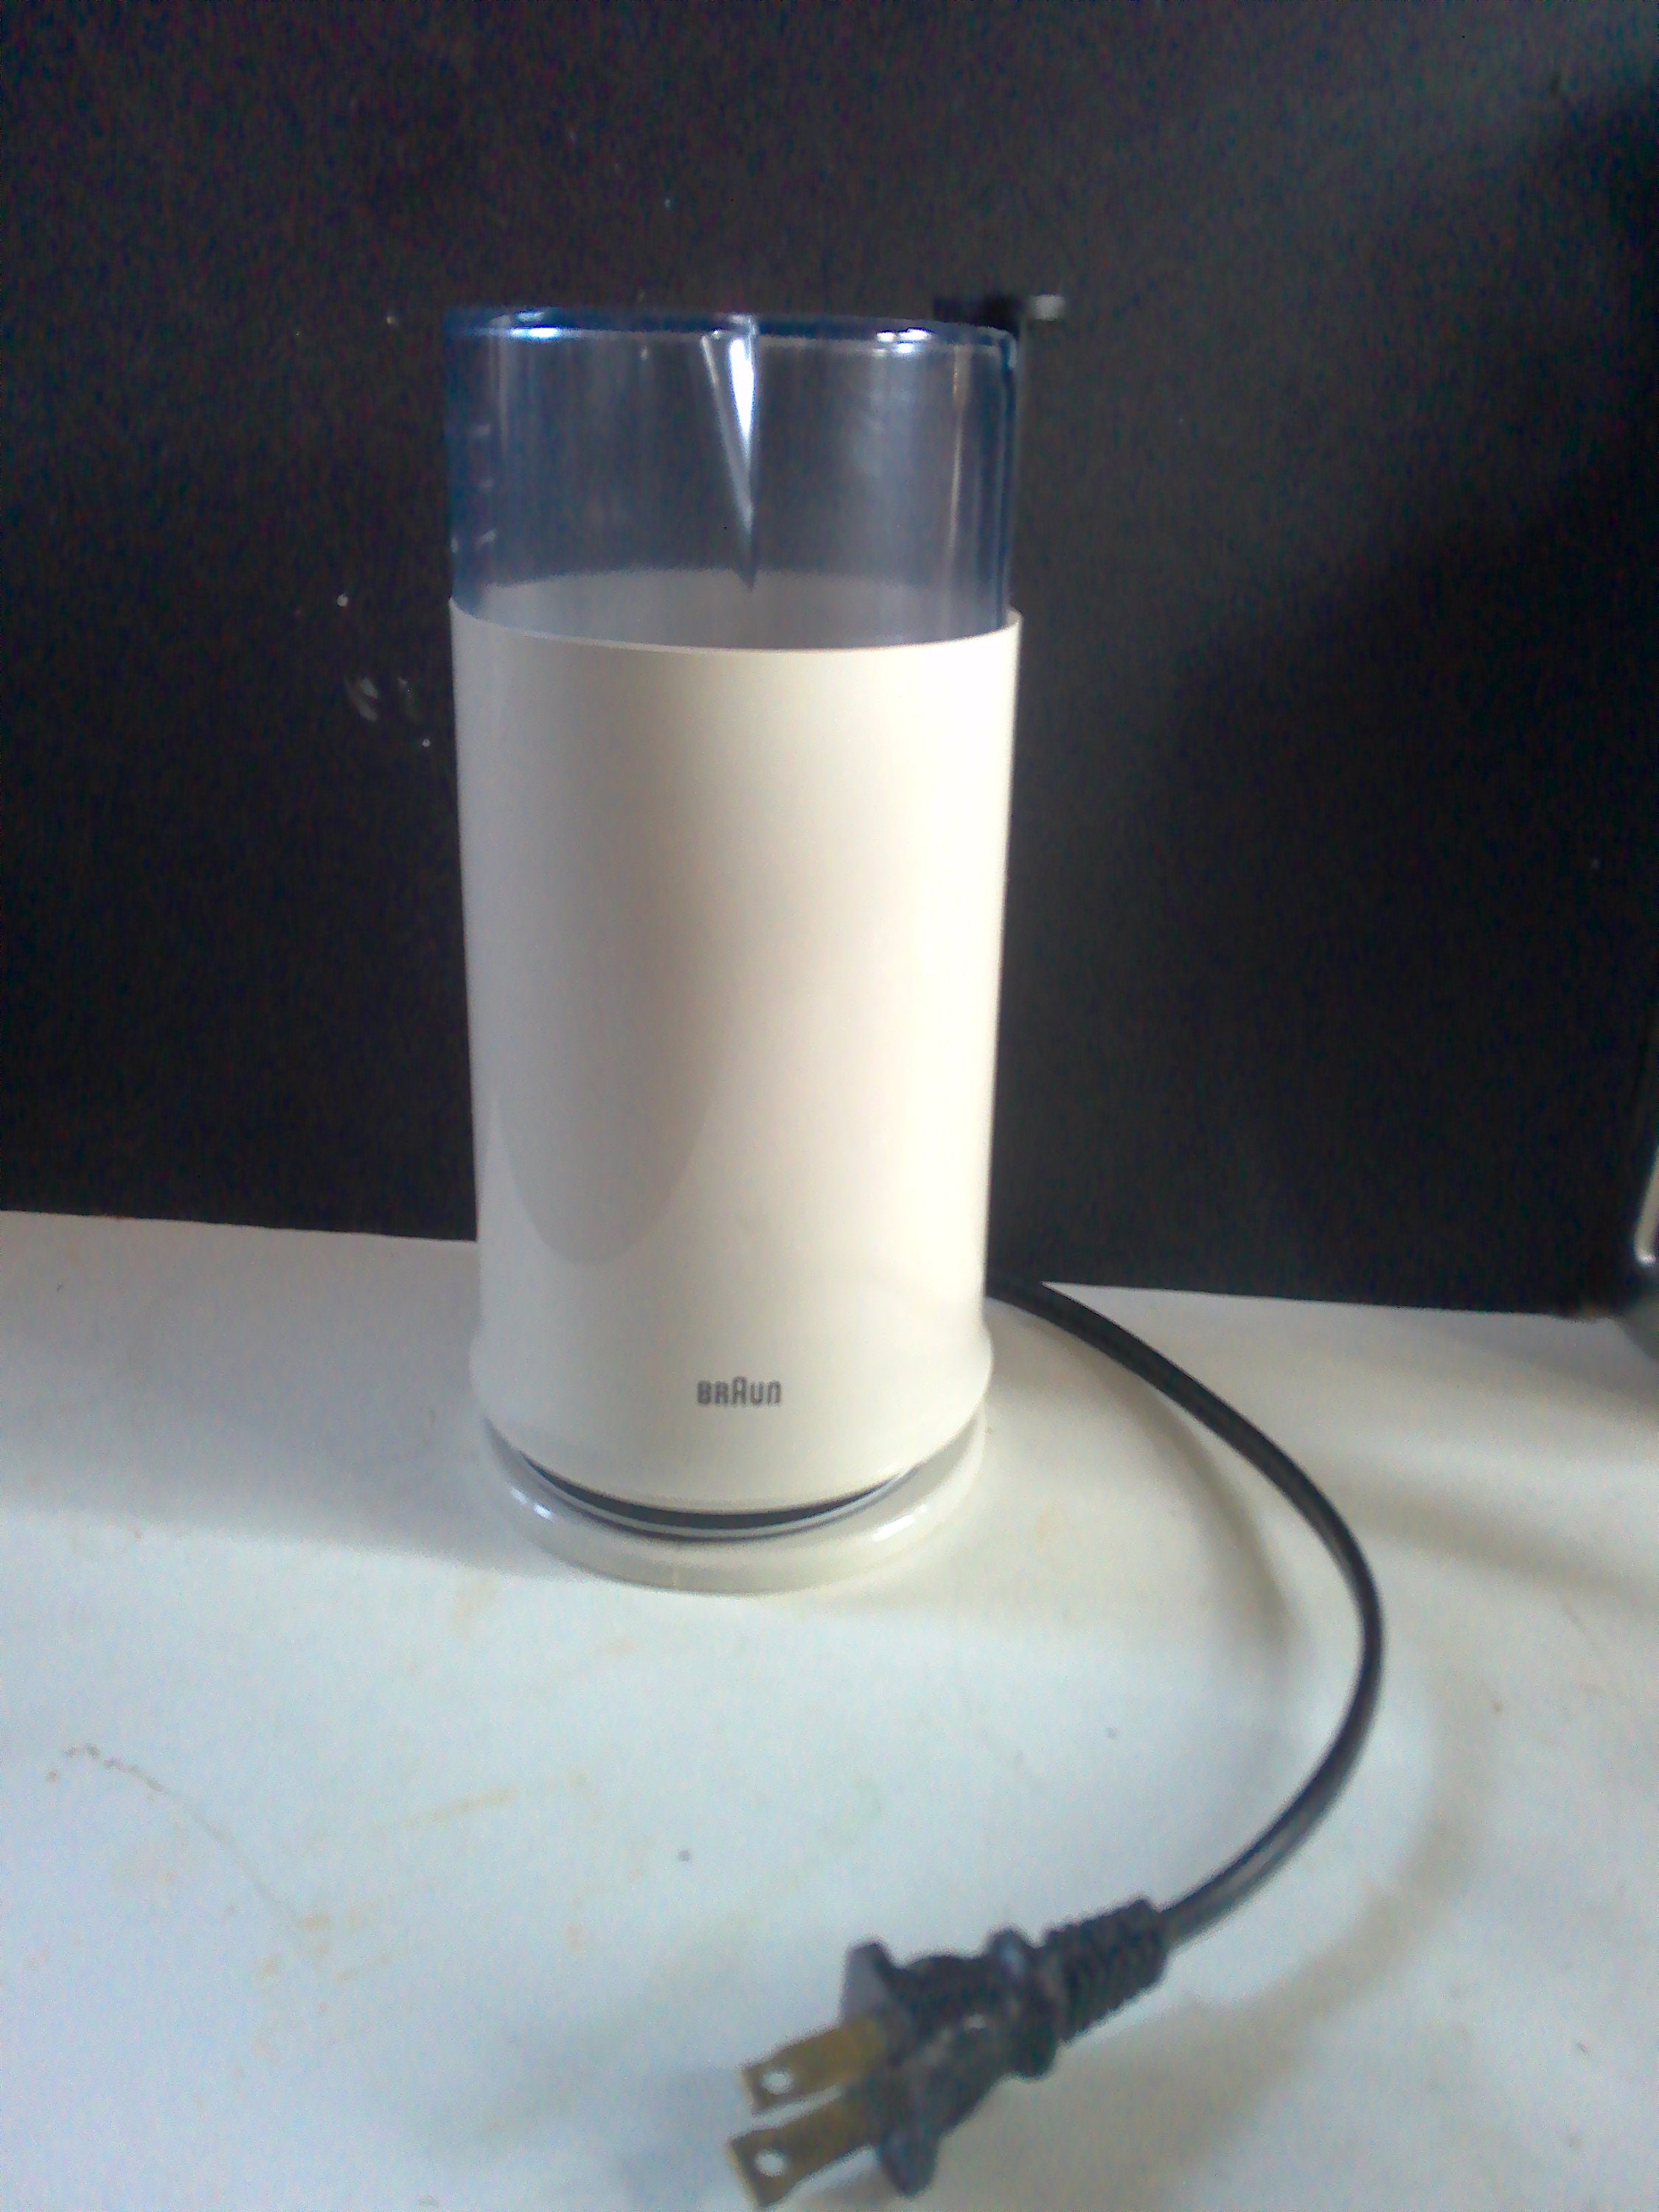 VTG Braun Electric Off-White Coffee Grinder Model KSM-2 Type 4041